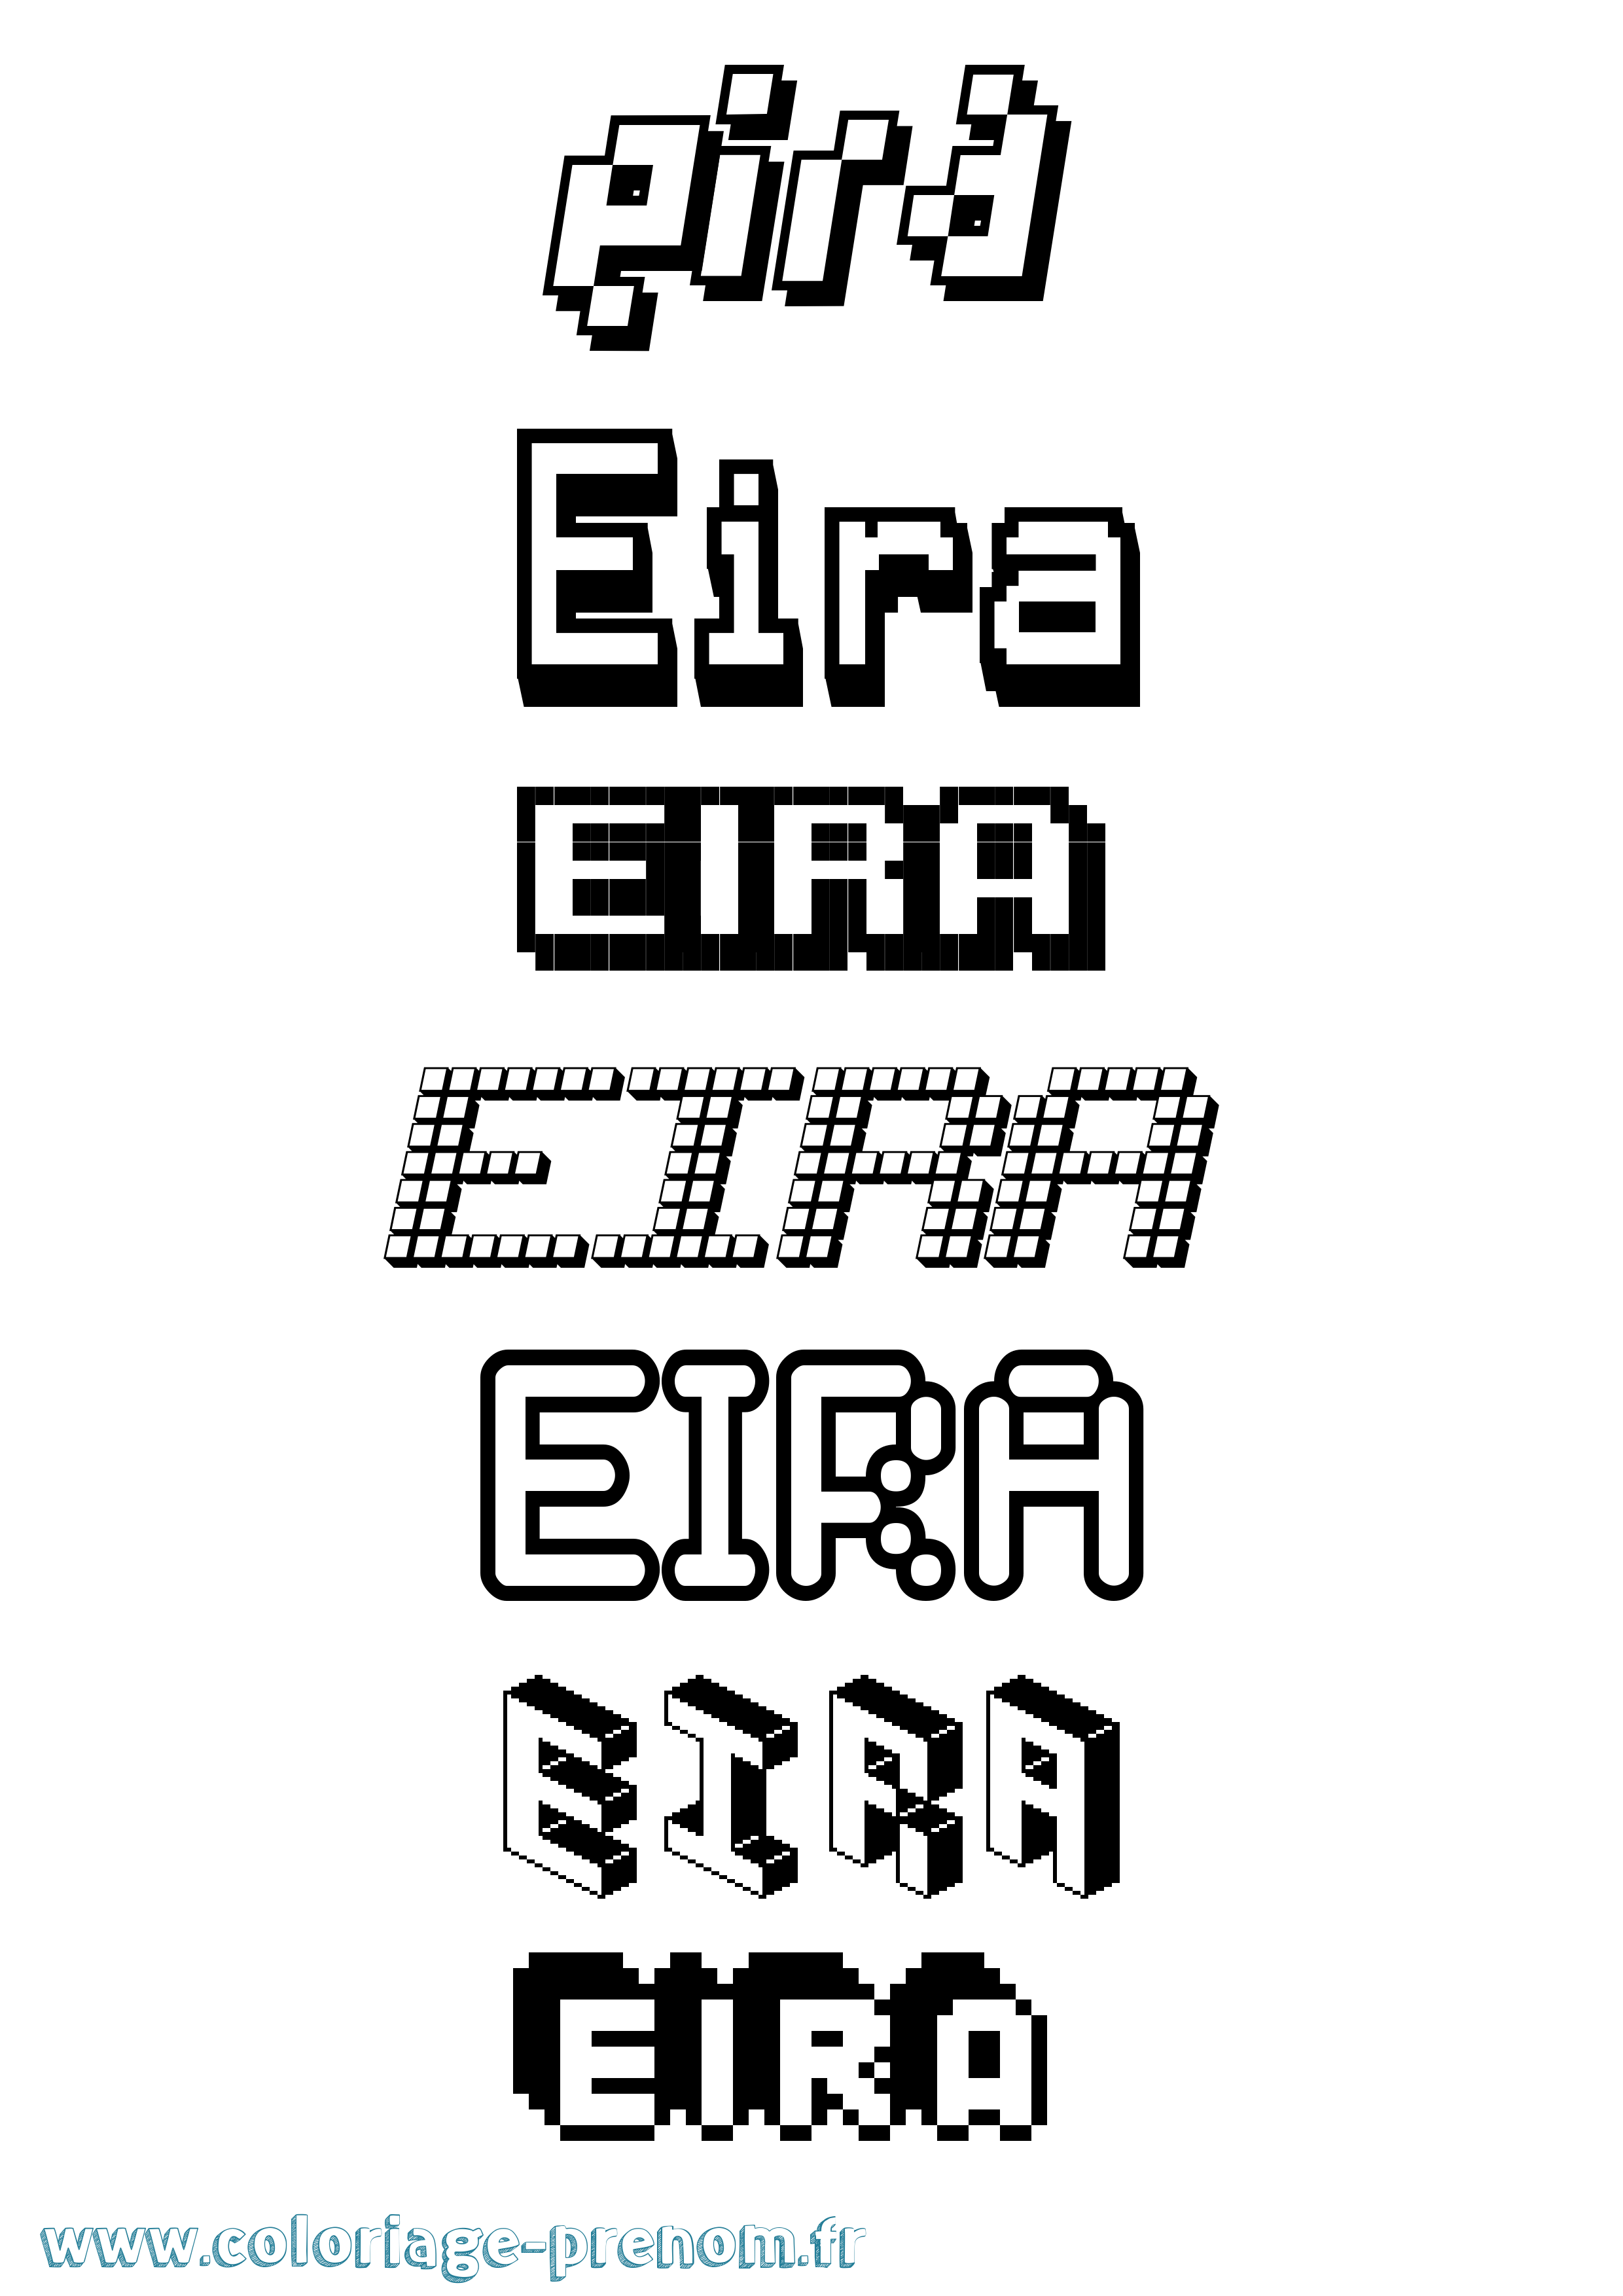 Coloriage prénom Eira Pixel